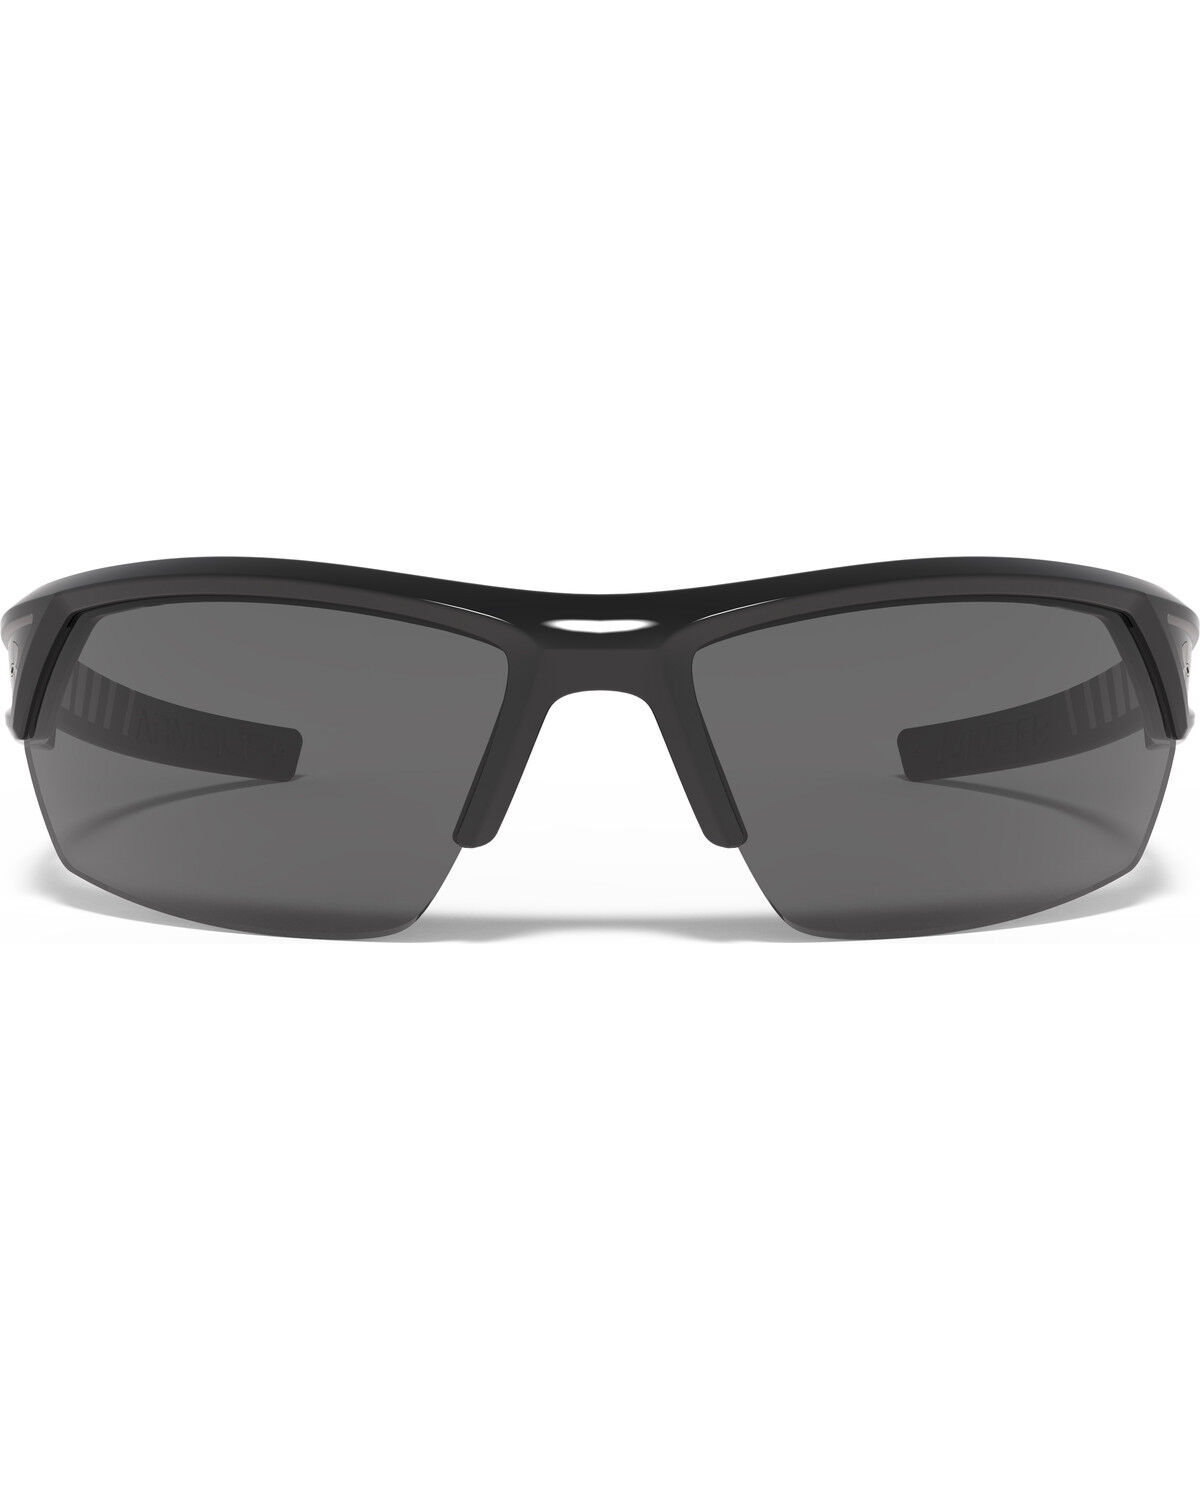 igniter 2.0 sunglasses